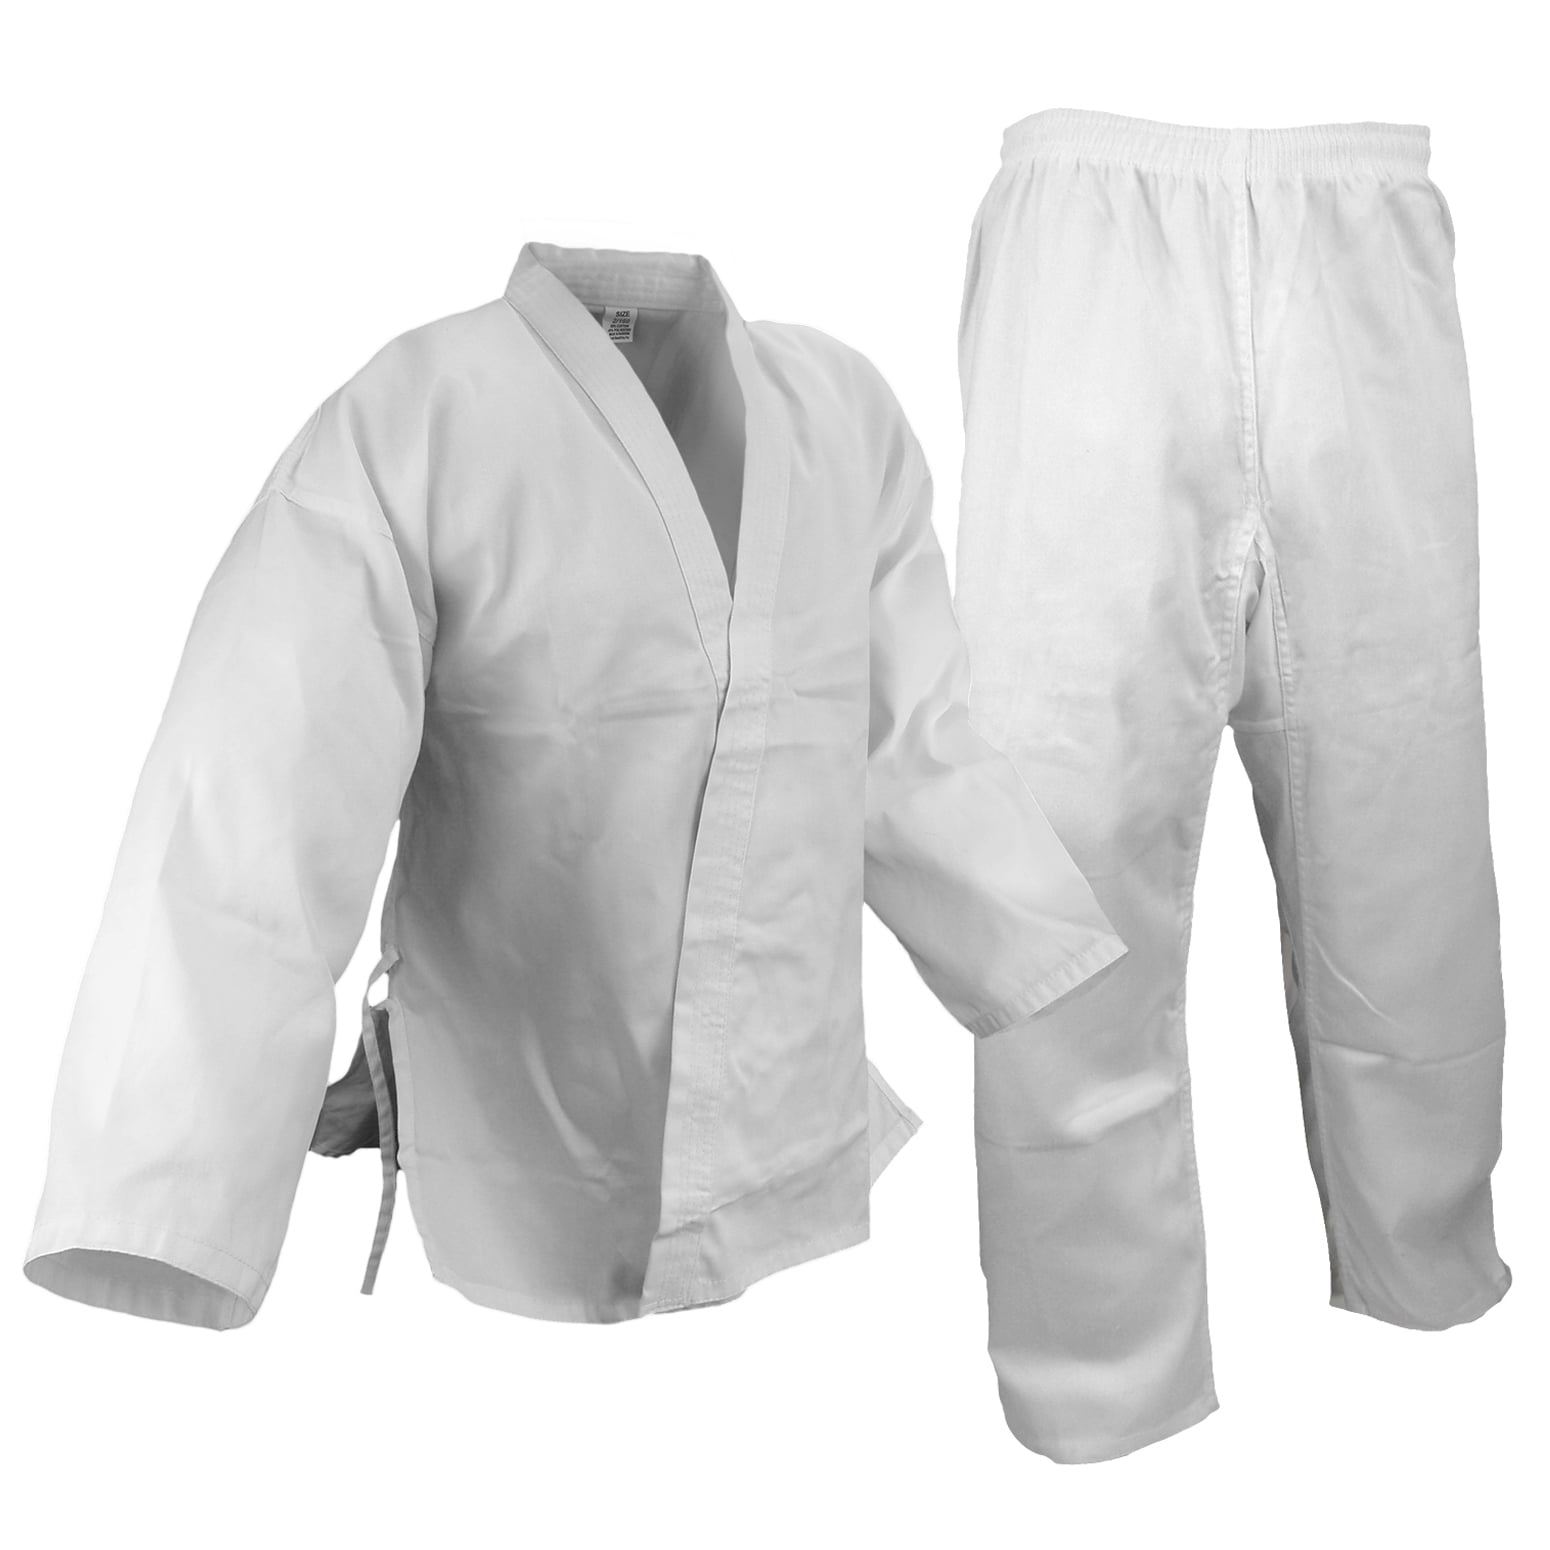 Details about   White judo gi kimono made from 100% cotton martial arts uniform 